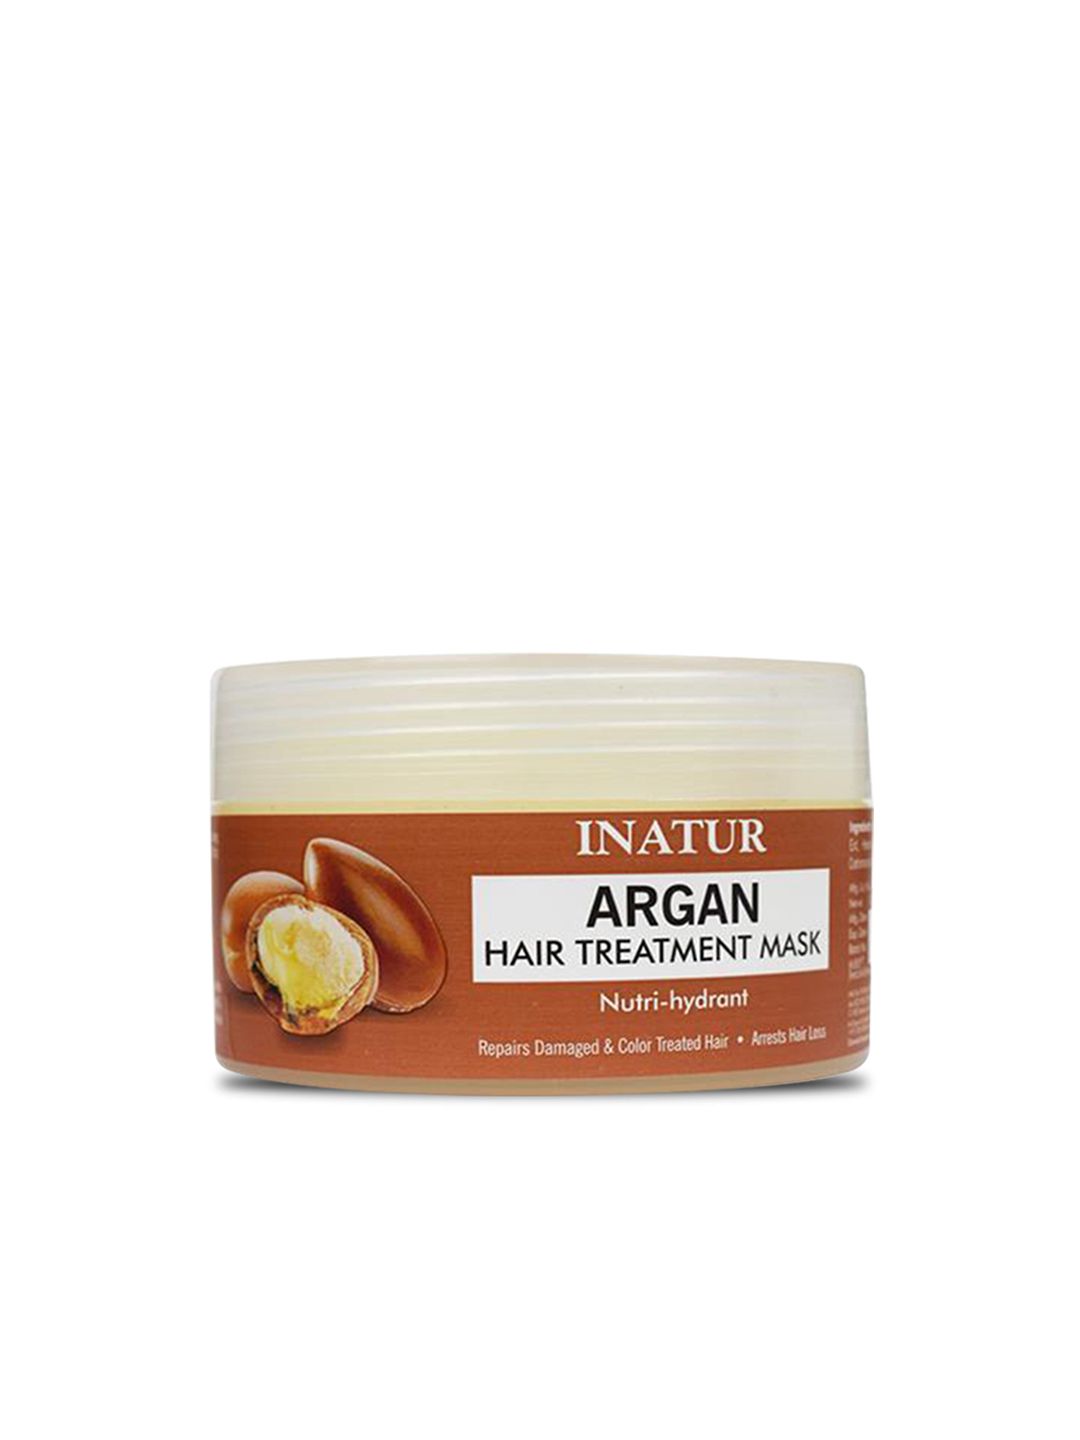 Inatur Argan Oil Hair Treatment Mask 200 g Price in India